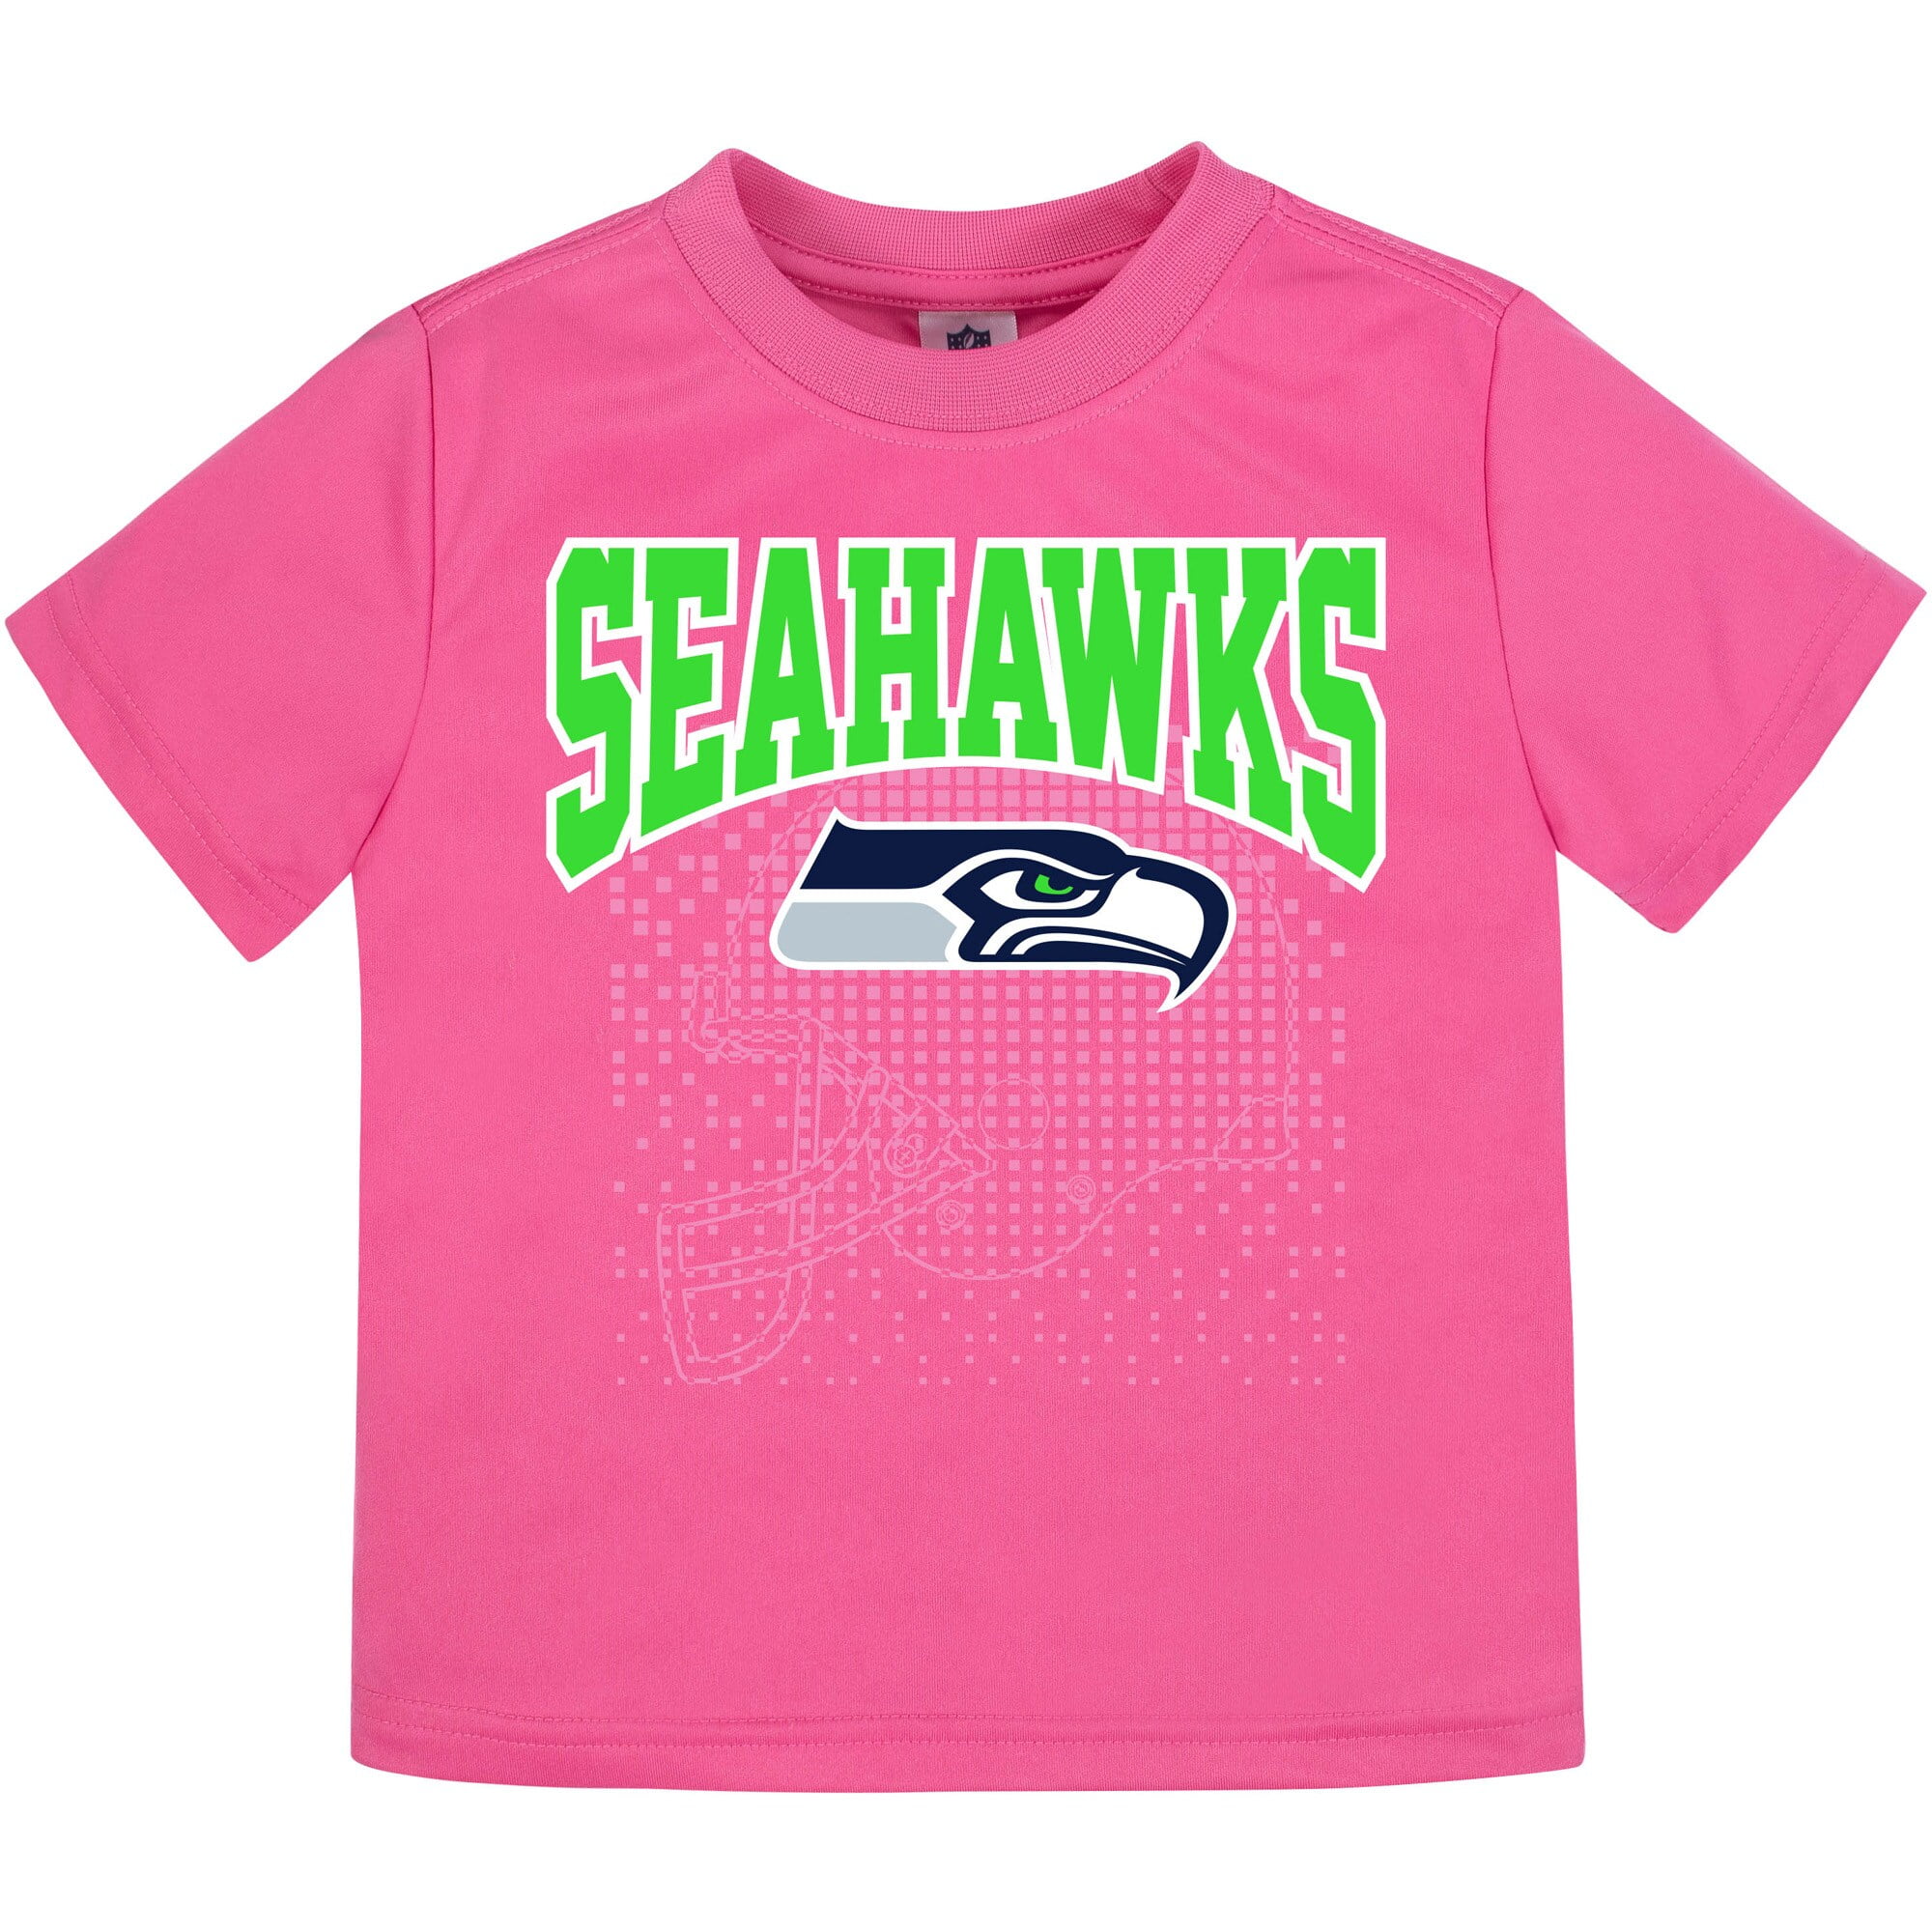 toddler seahawks t shirt